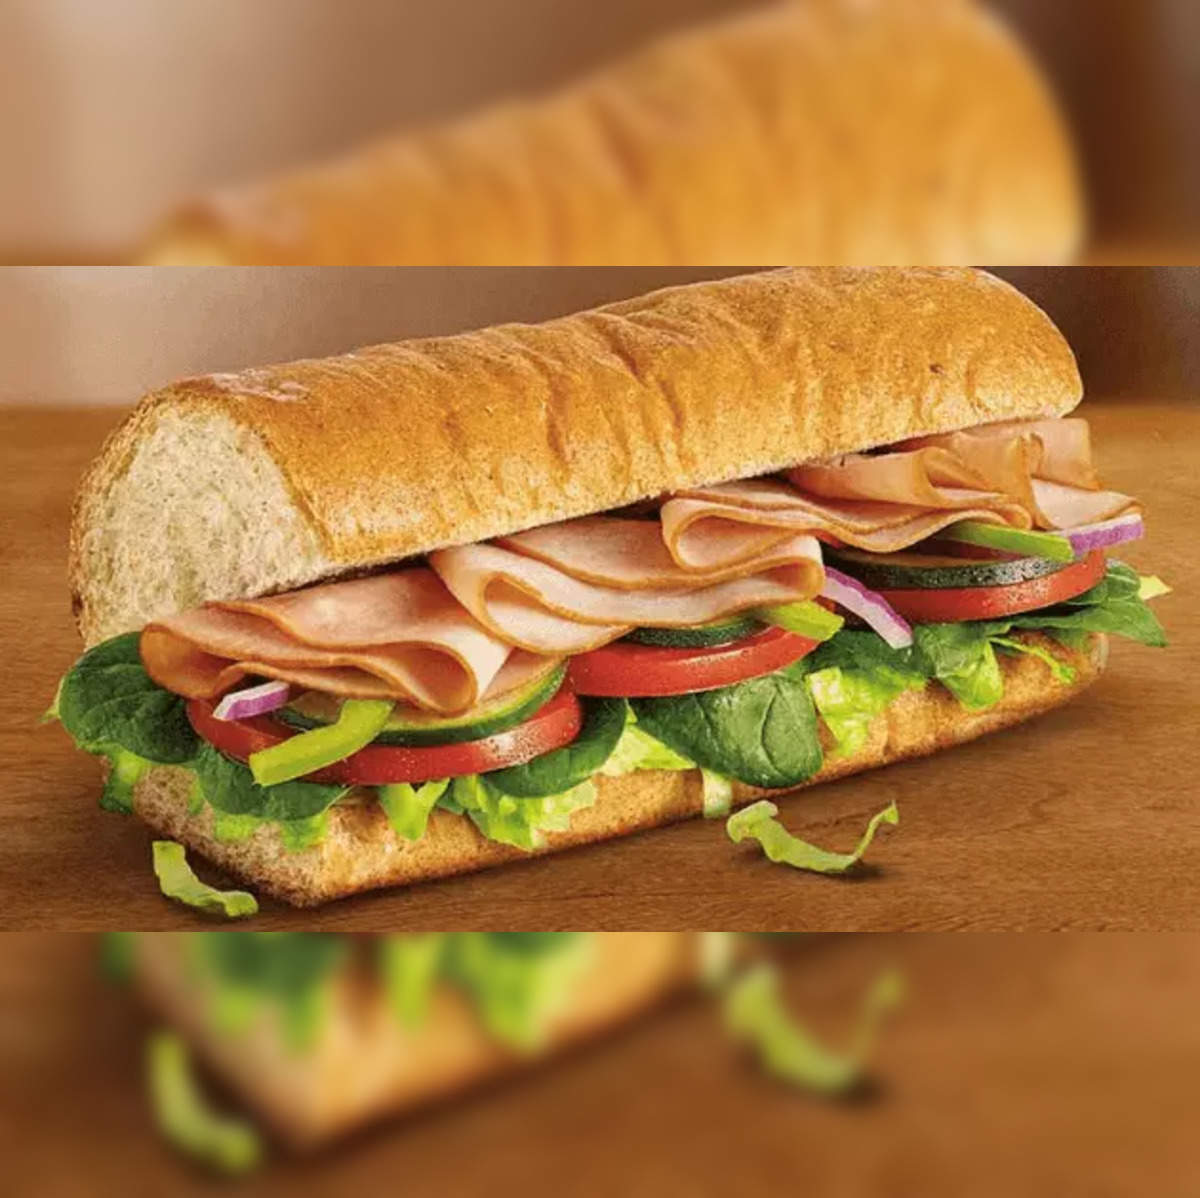 The Sandwich Evolution: Subway's Customer Experience Innovation